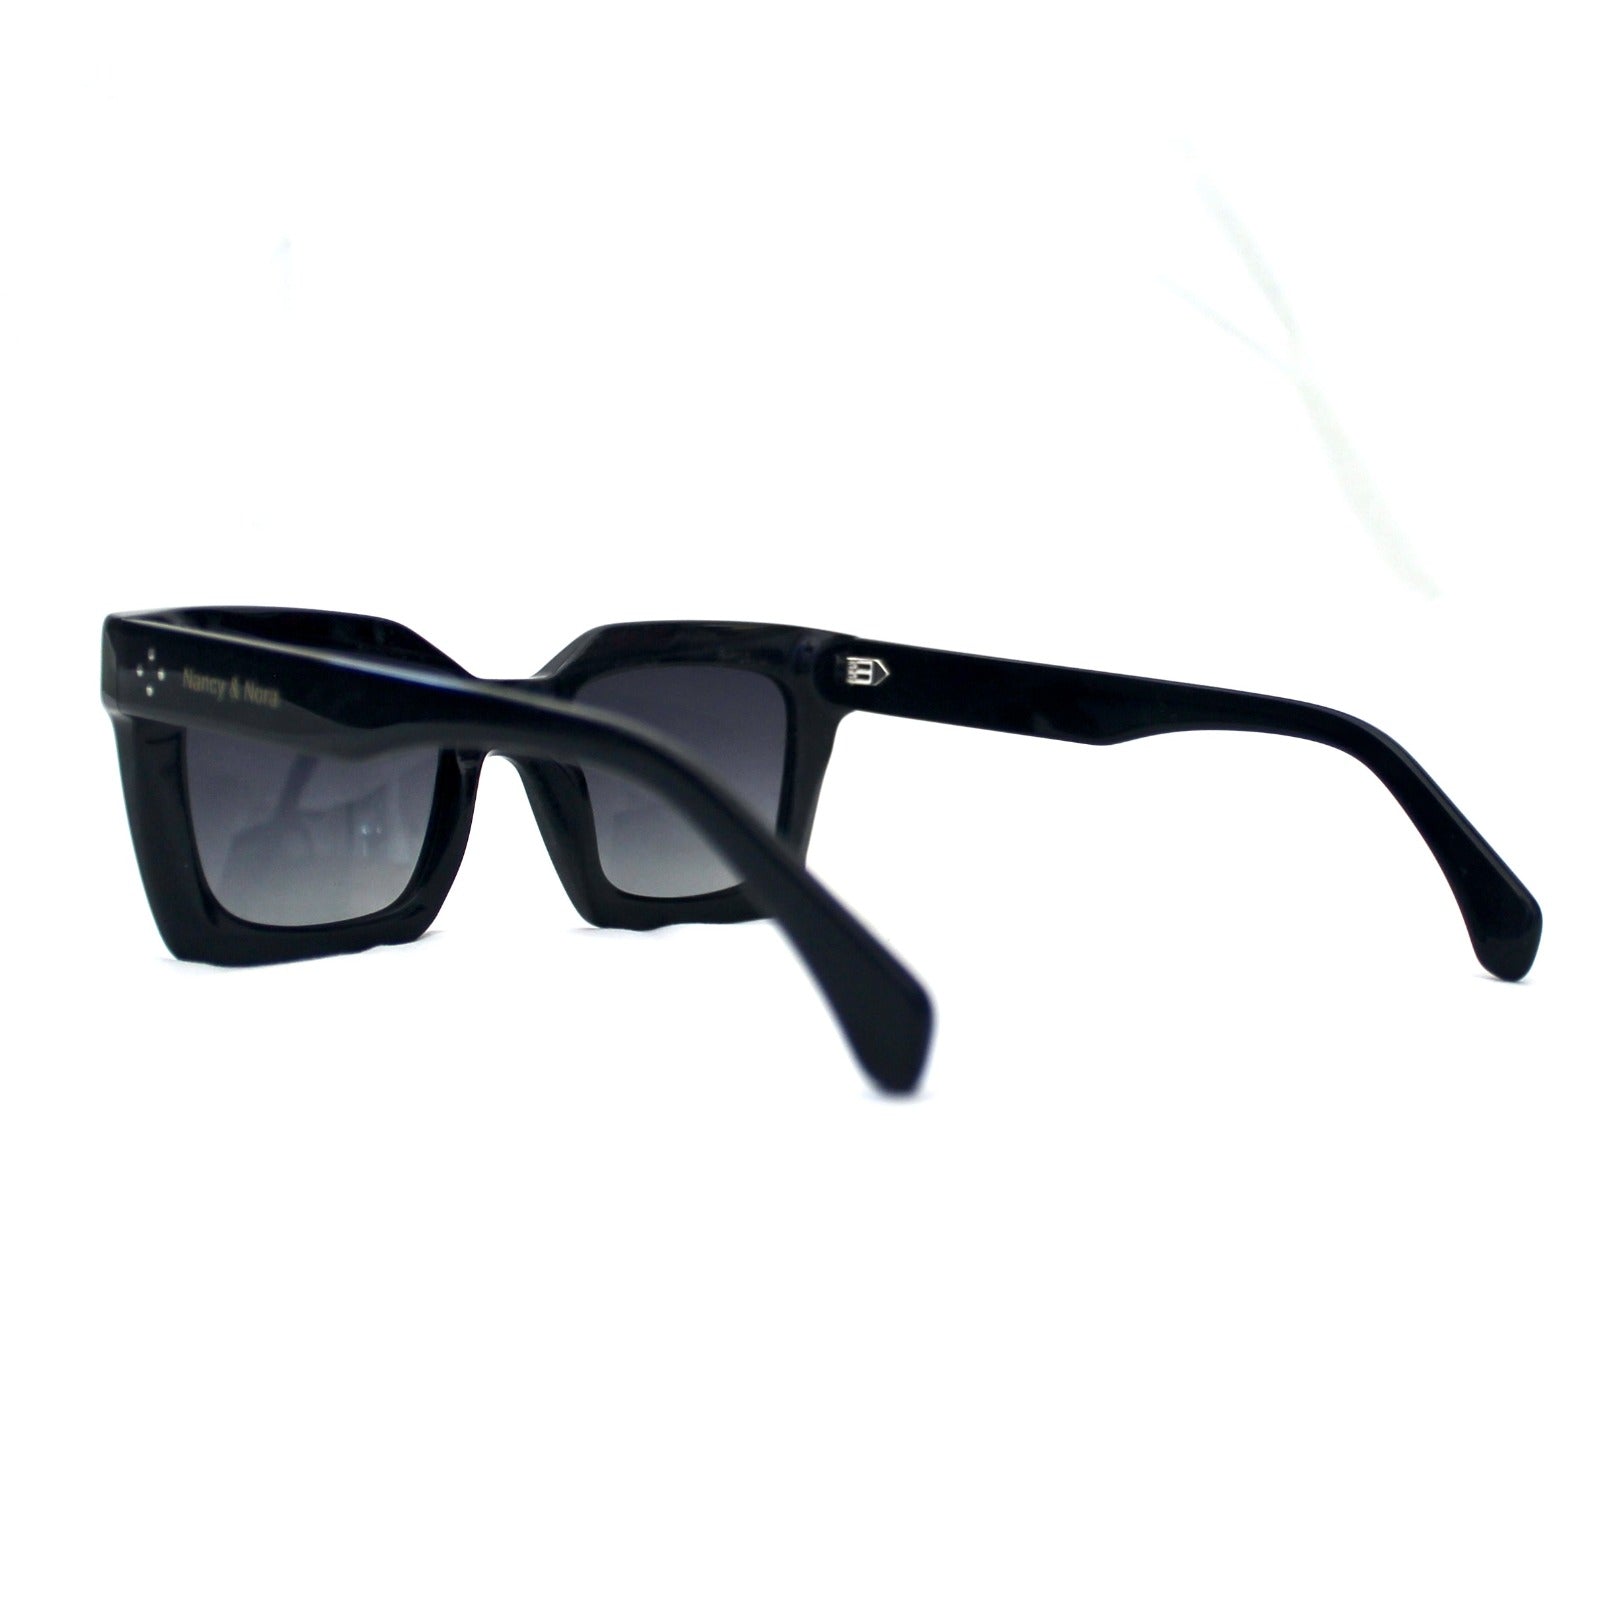 Symi Sunglasses Black